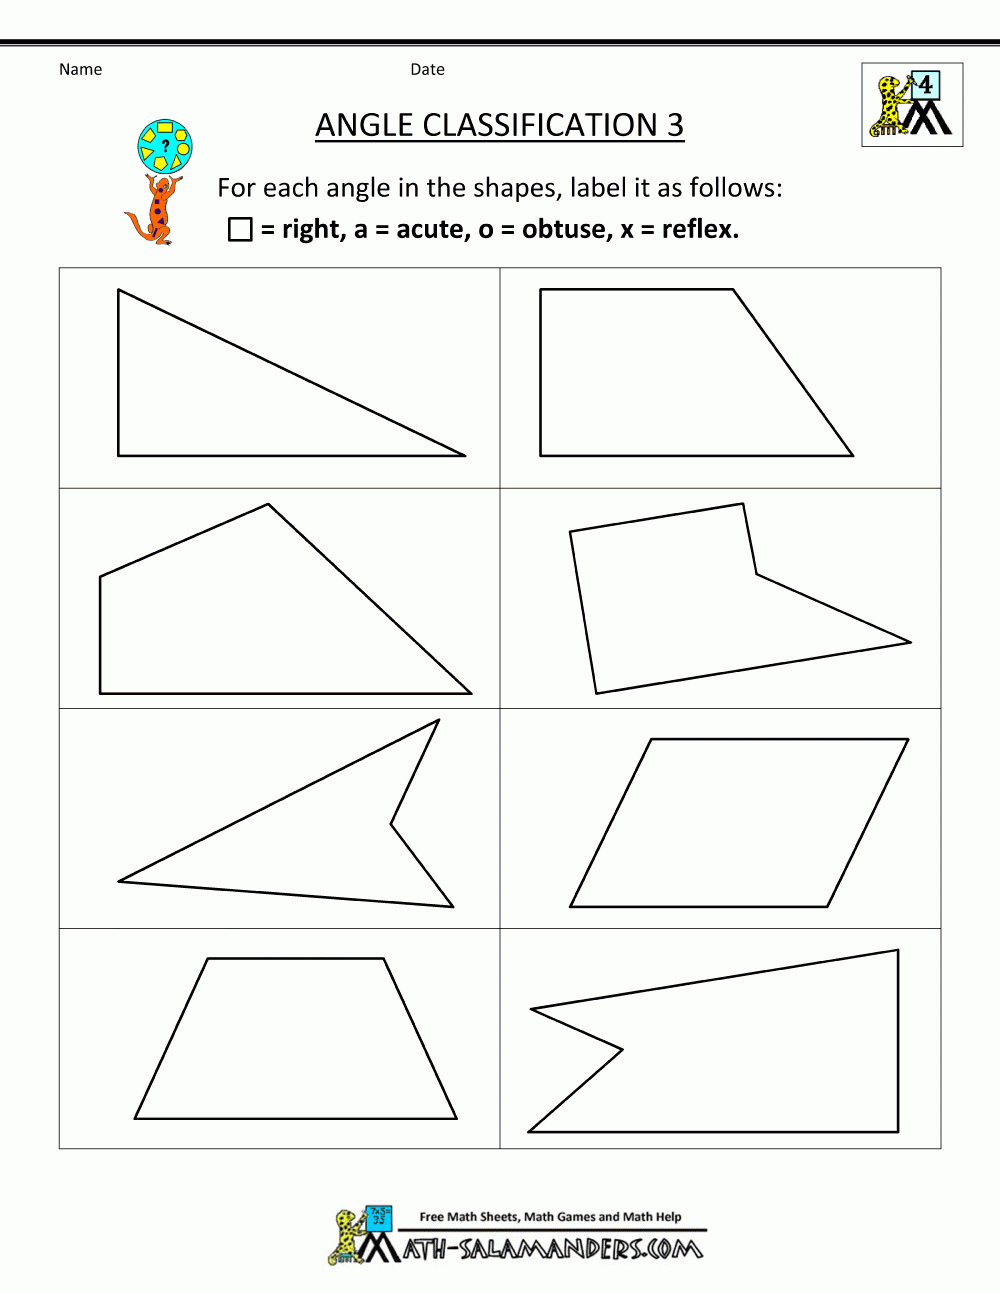 4th-grade-geometry-worksheets-db-excel